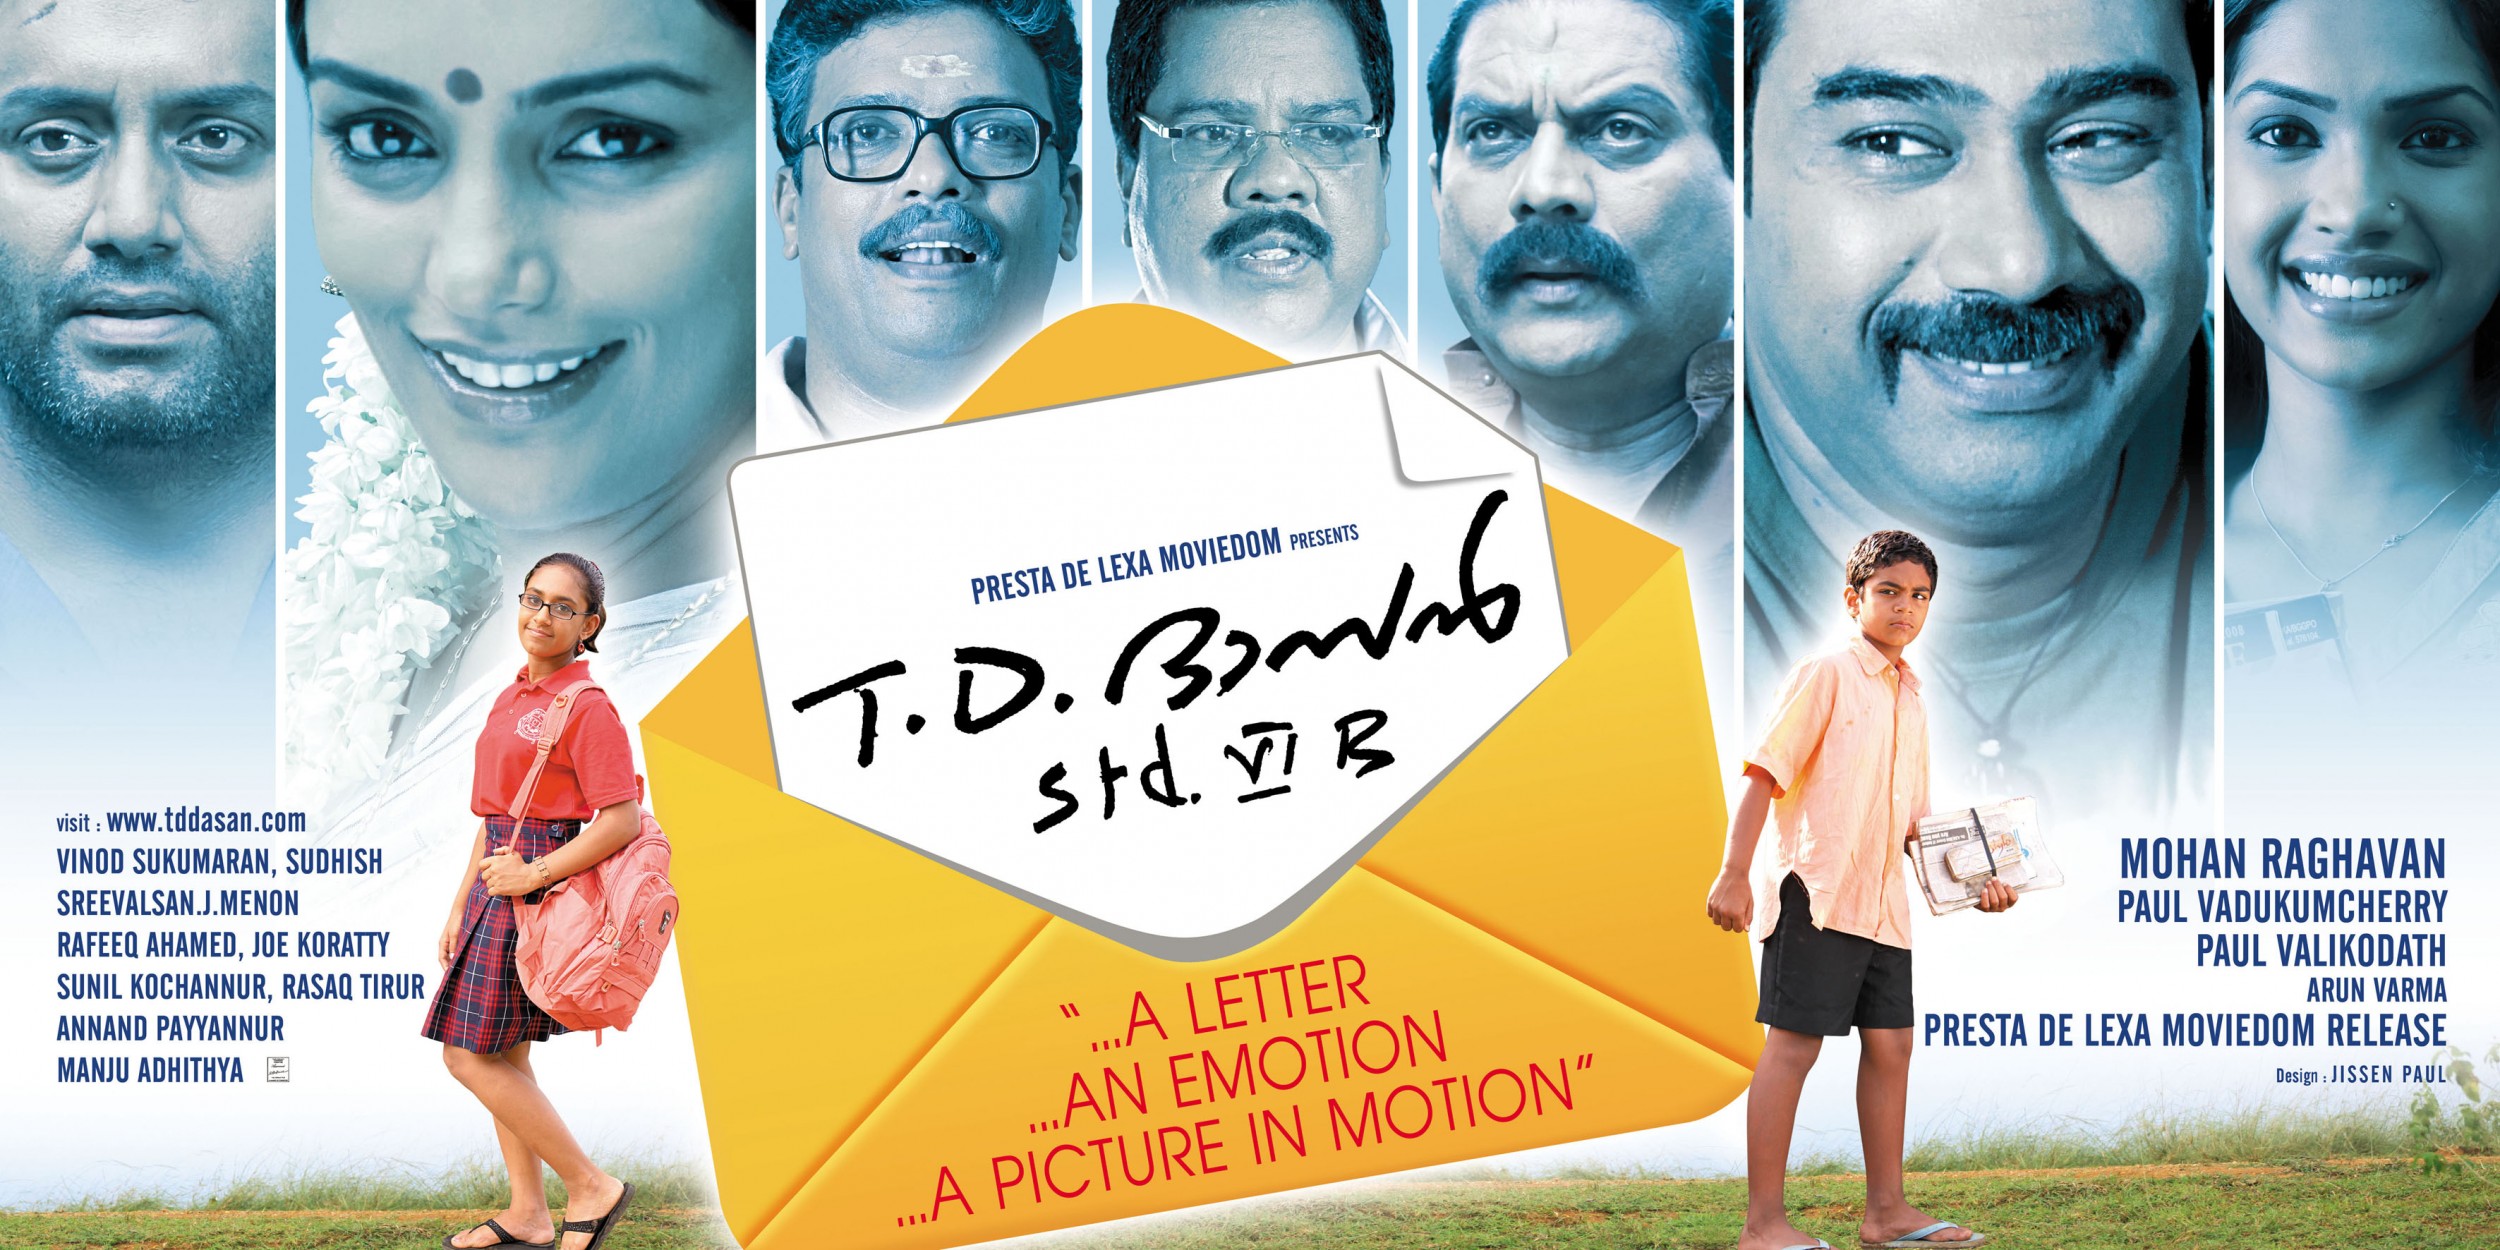 Mega Sized Movie Poster Image for TD Dasan Standard VI B (#3 of 3)